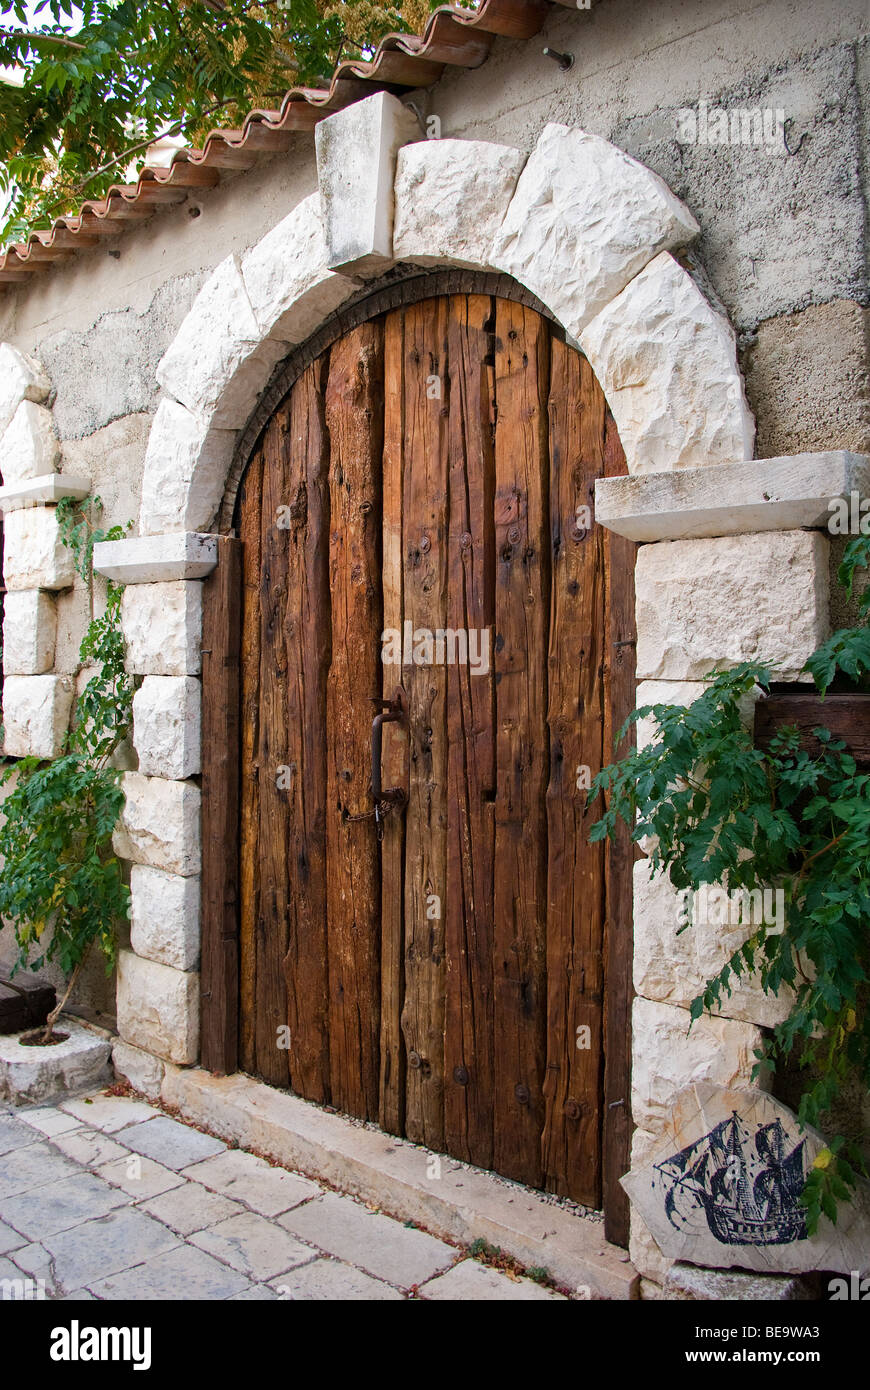 Croatia; Hrvartska; Kroatien, Hvar Island; Strai Grad, aged wooden door, with rounded top, in stone wall Stock Photo